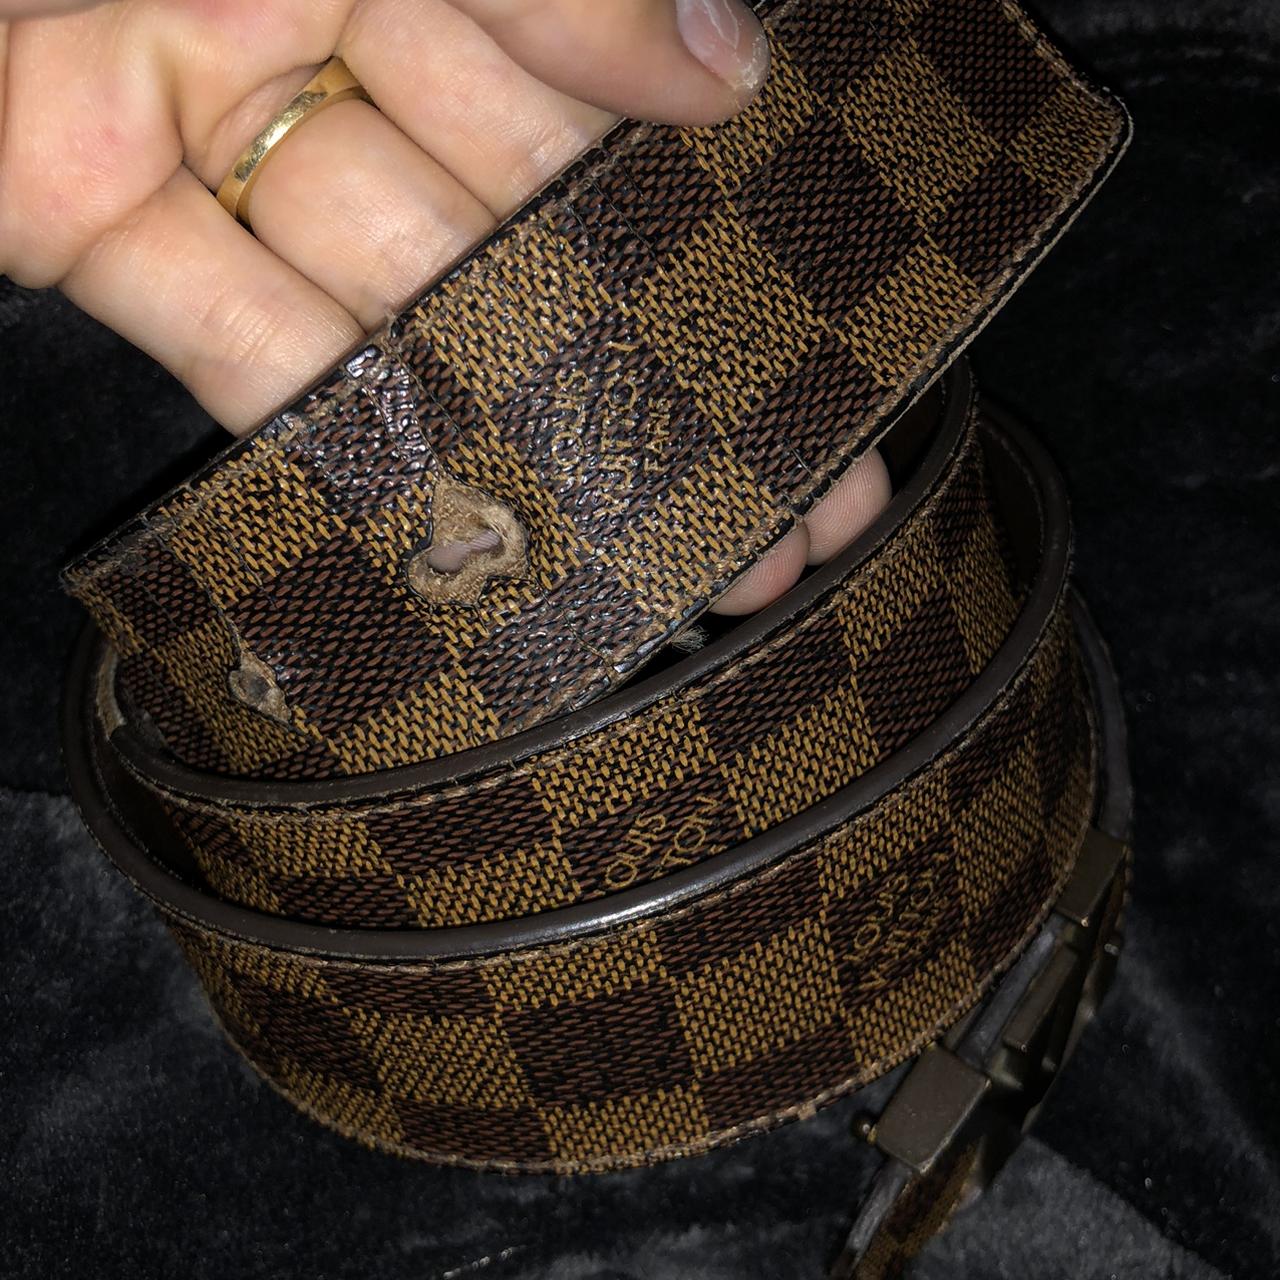 Louis Vuitton Damier Belt (brown)